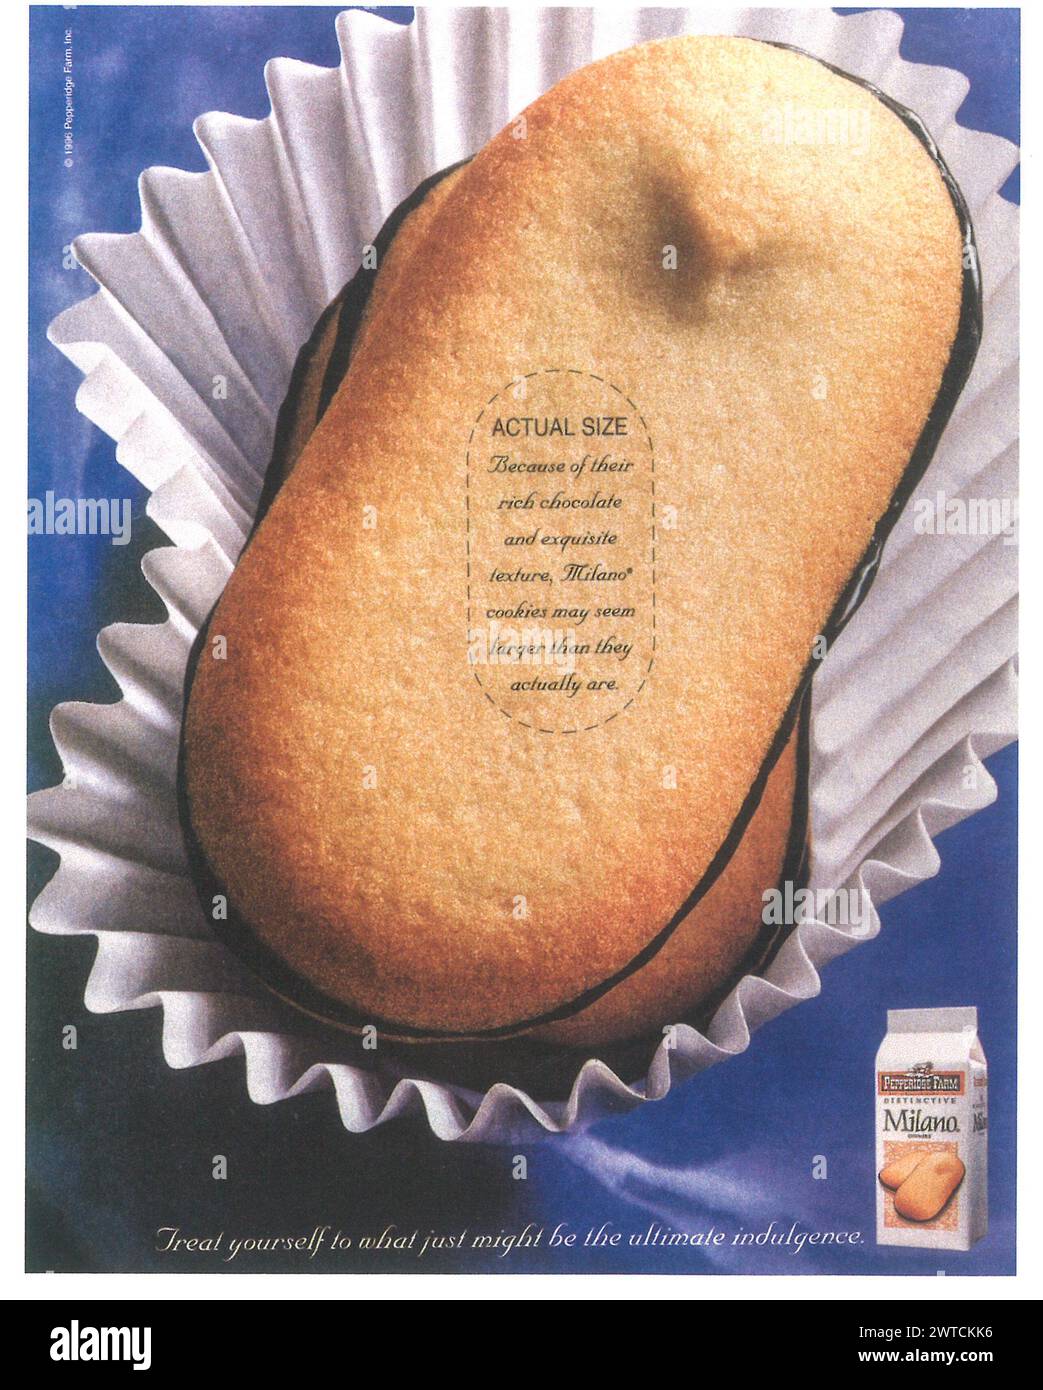 1996 Pepperidge Farm Milano cookies ad Stock Photo